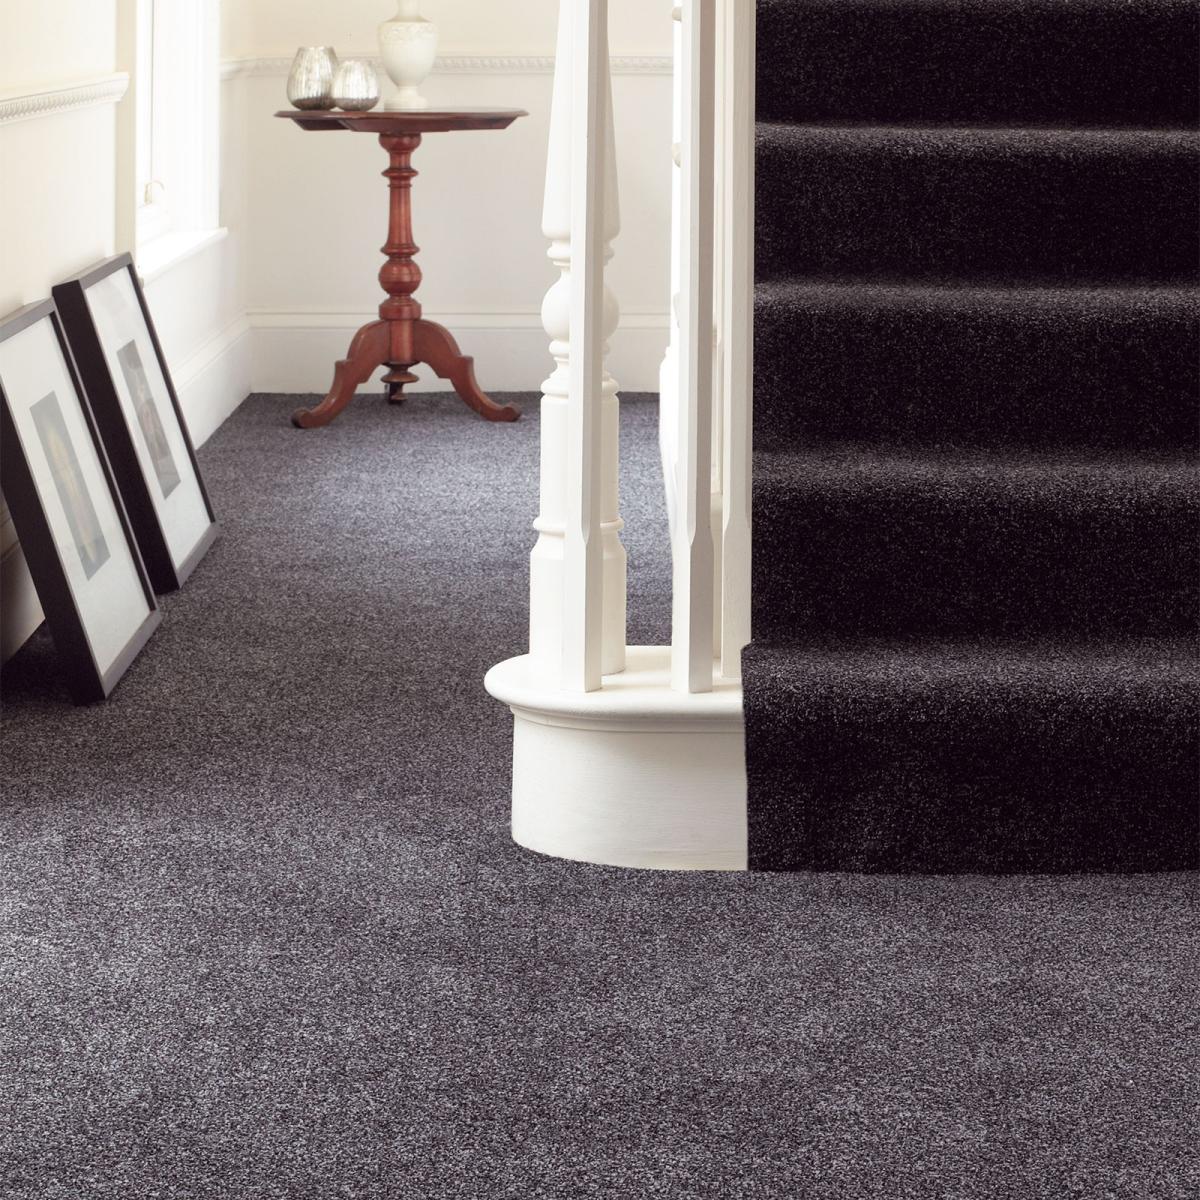 Abingdon Flooring StainFree Arena Carpet Range